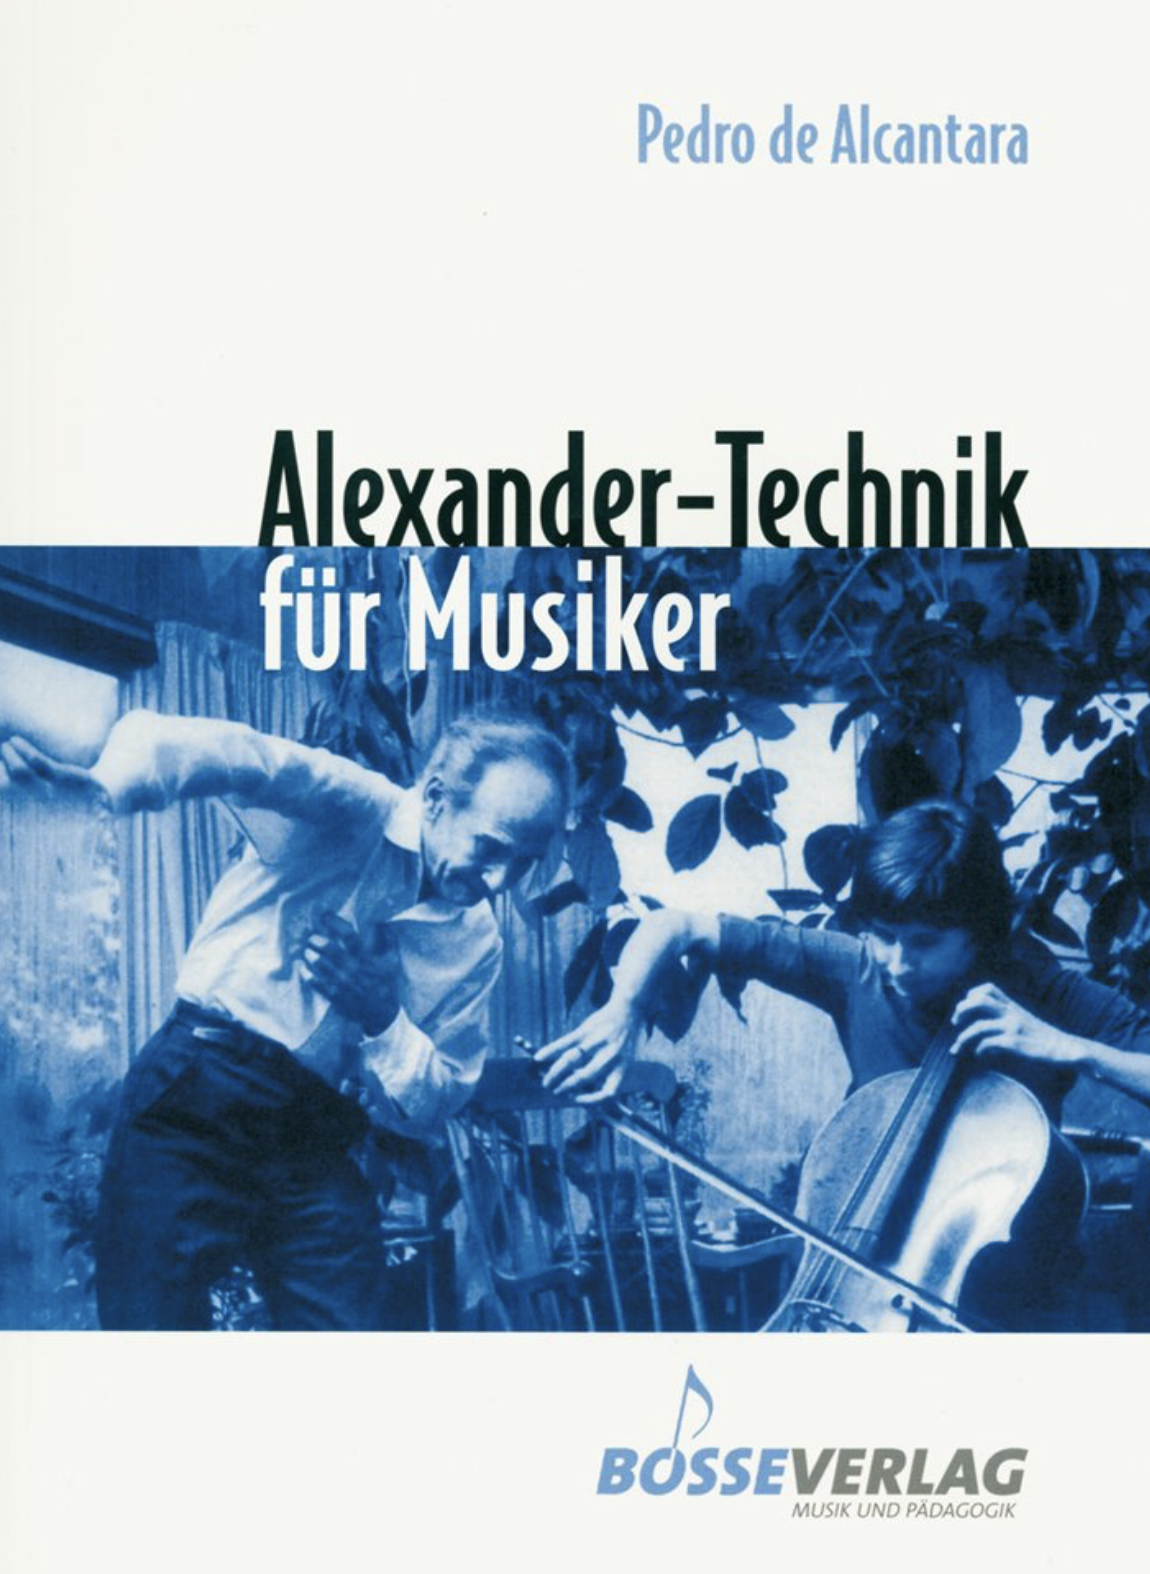 Buchumschlag Alexander-Technik für Musiker Autor Pedro de Alcantara